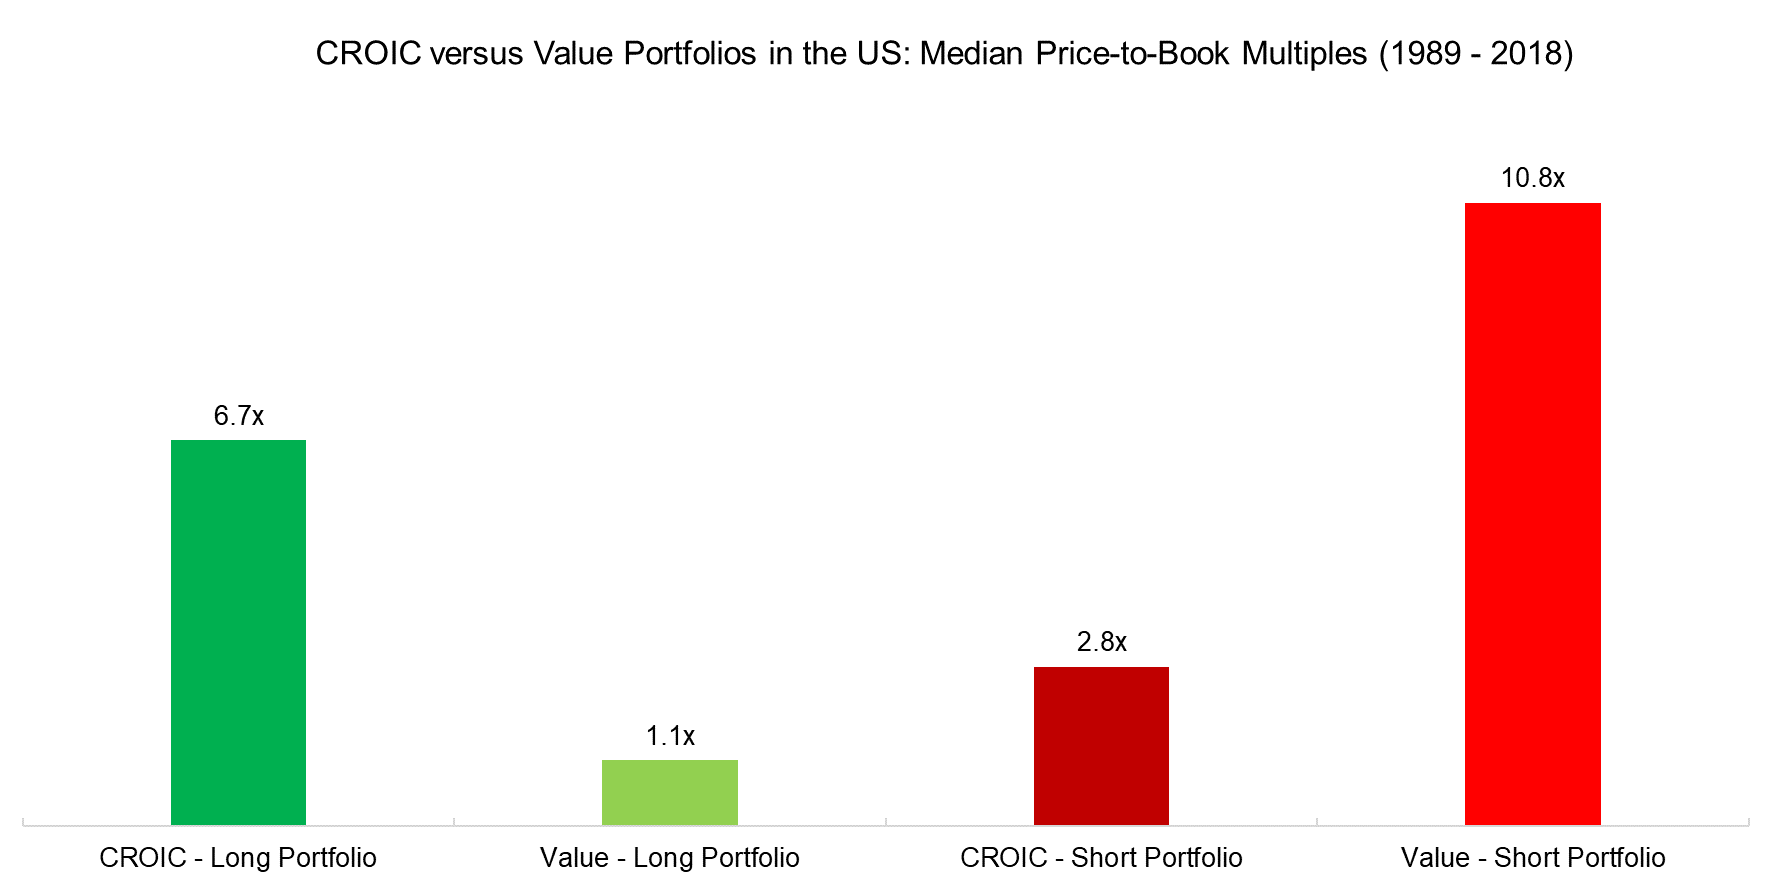 CROIC versus Value Portfolios in the US Median Price-to-Book Multiples (1989 - 2018)